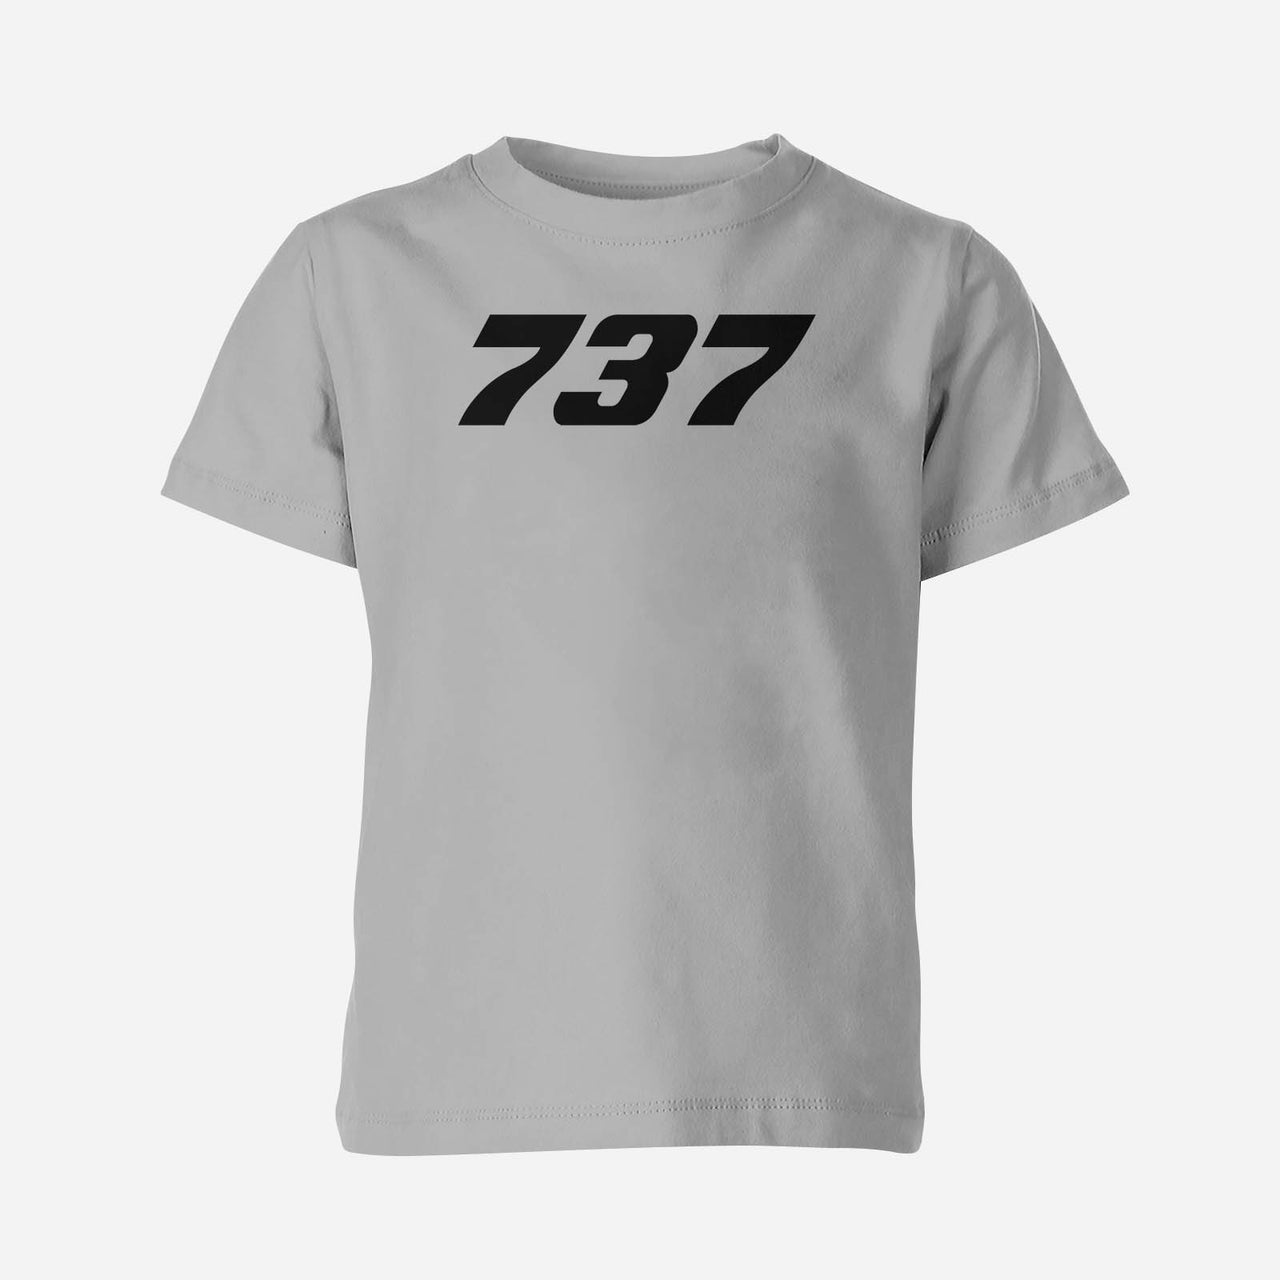 737 Flat Text Designed Children T-Shirts